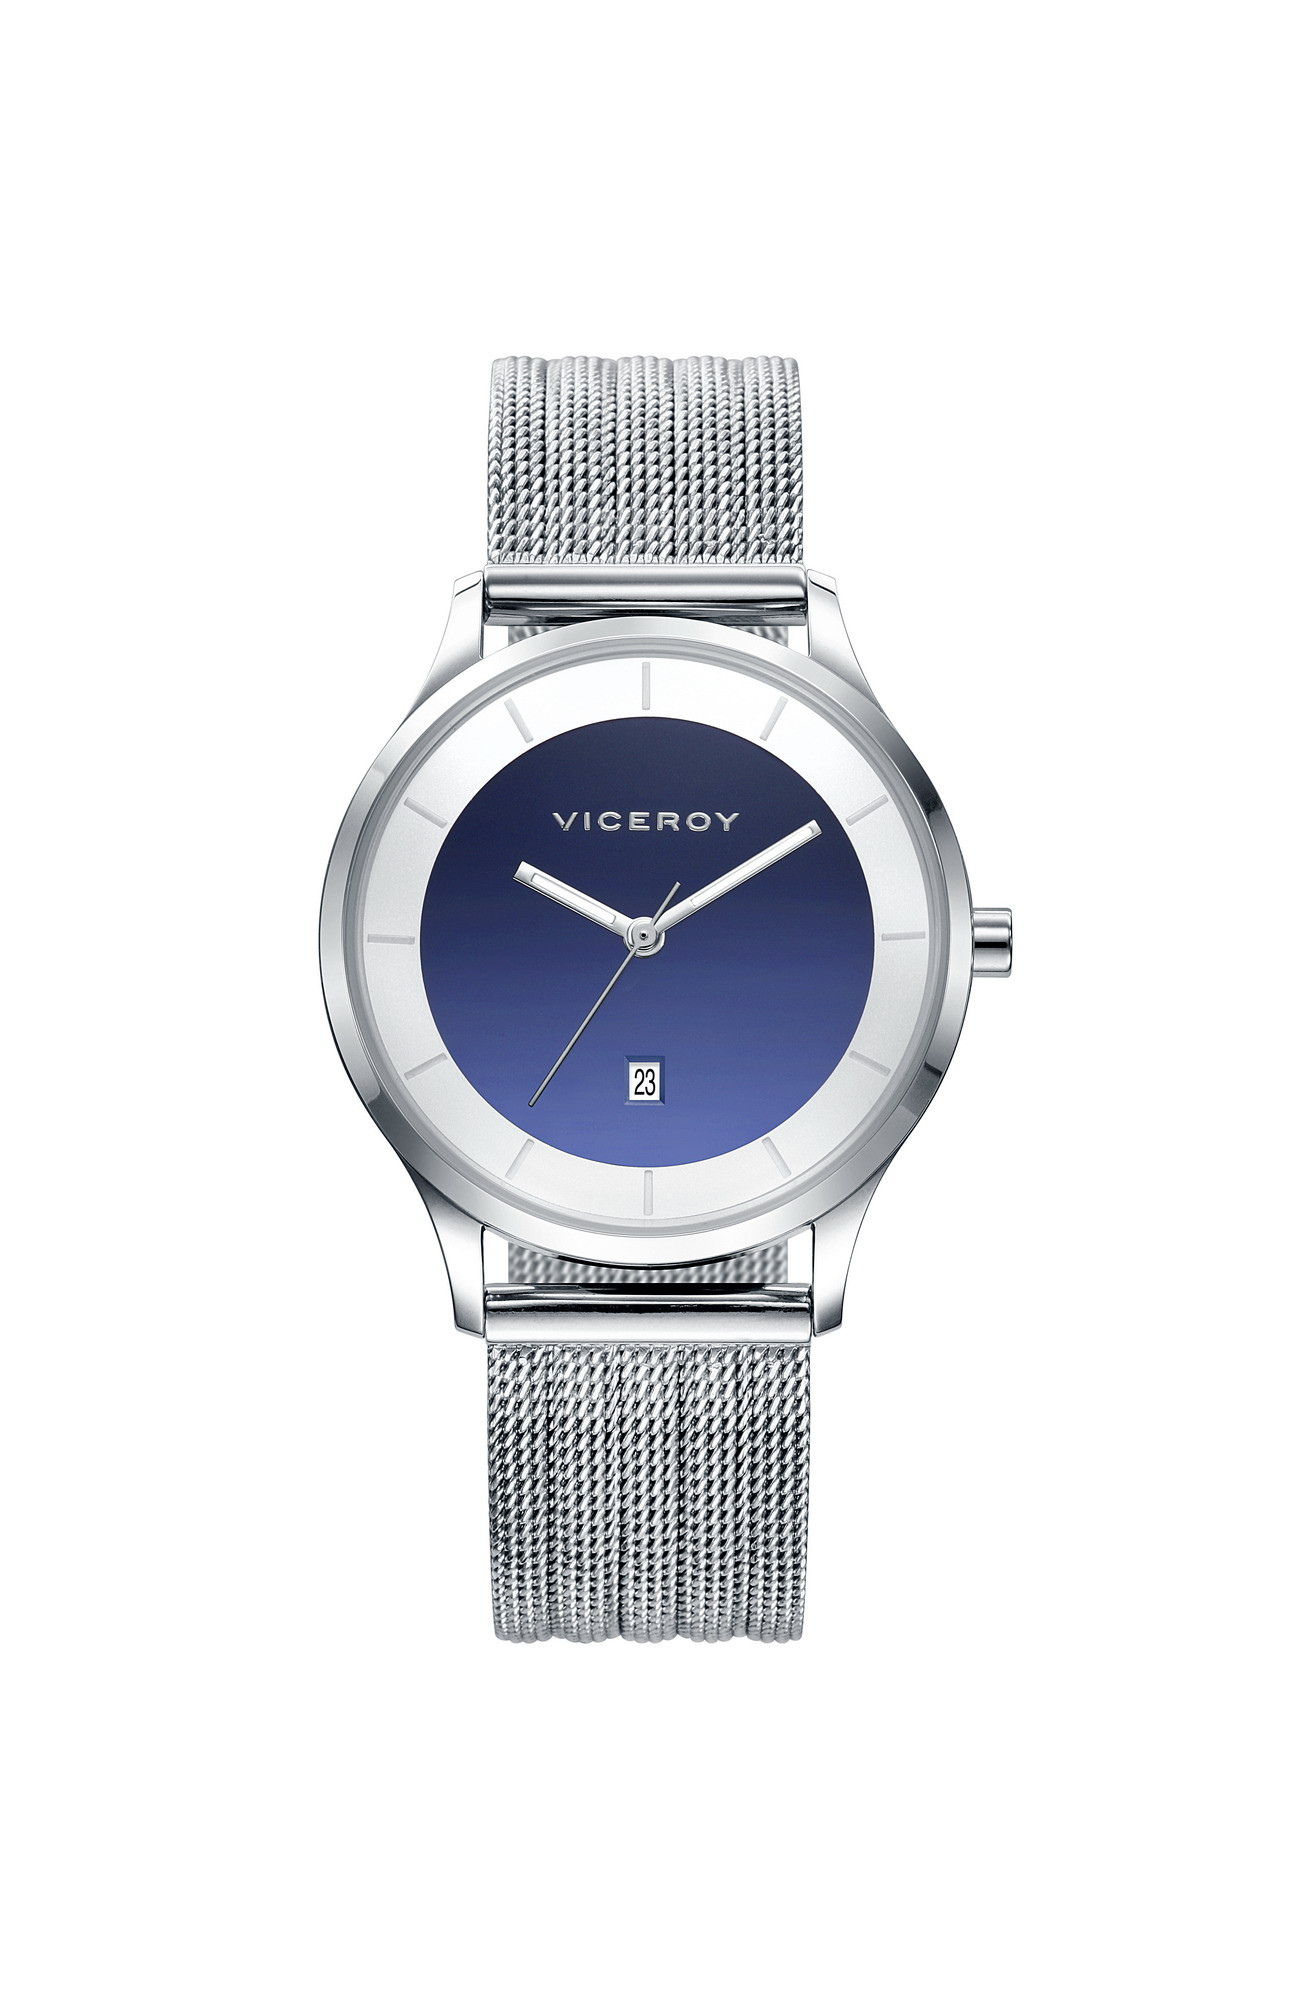 Viceroy 42288-37 reloj mujer | Relojería Joyería